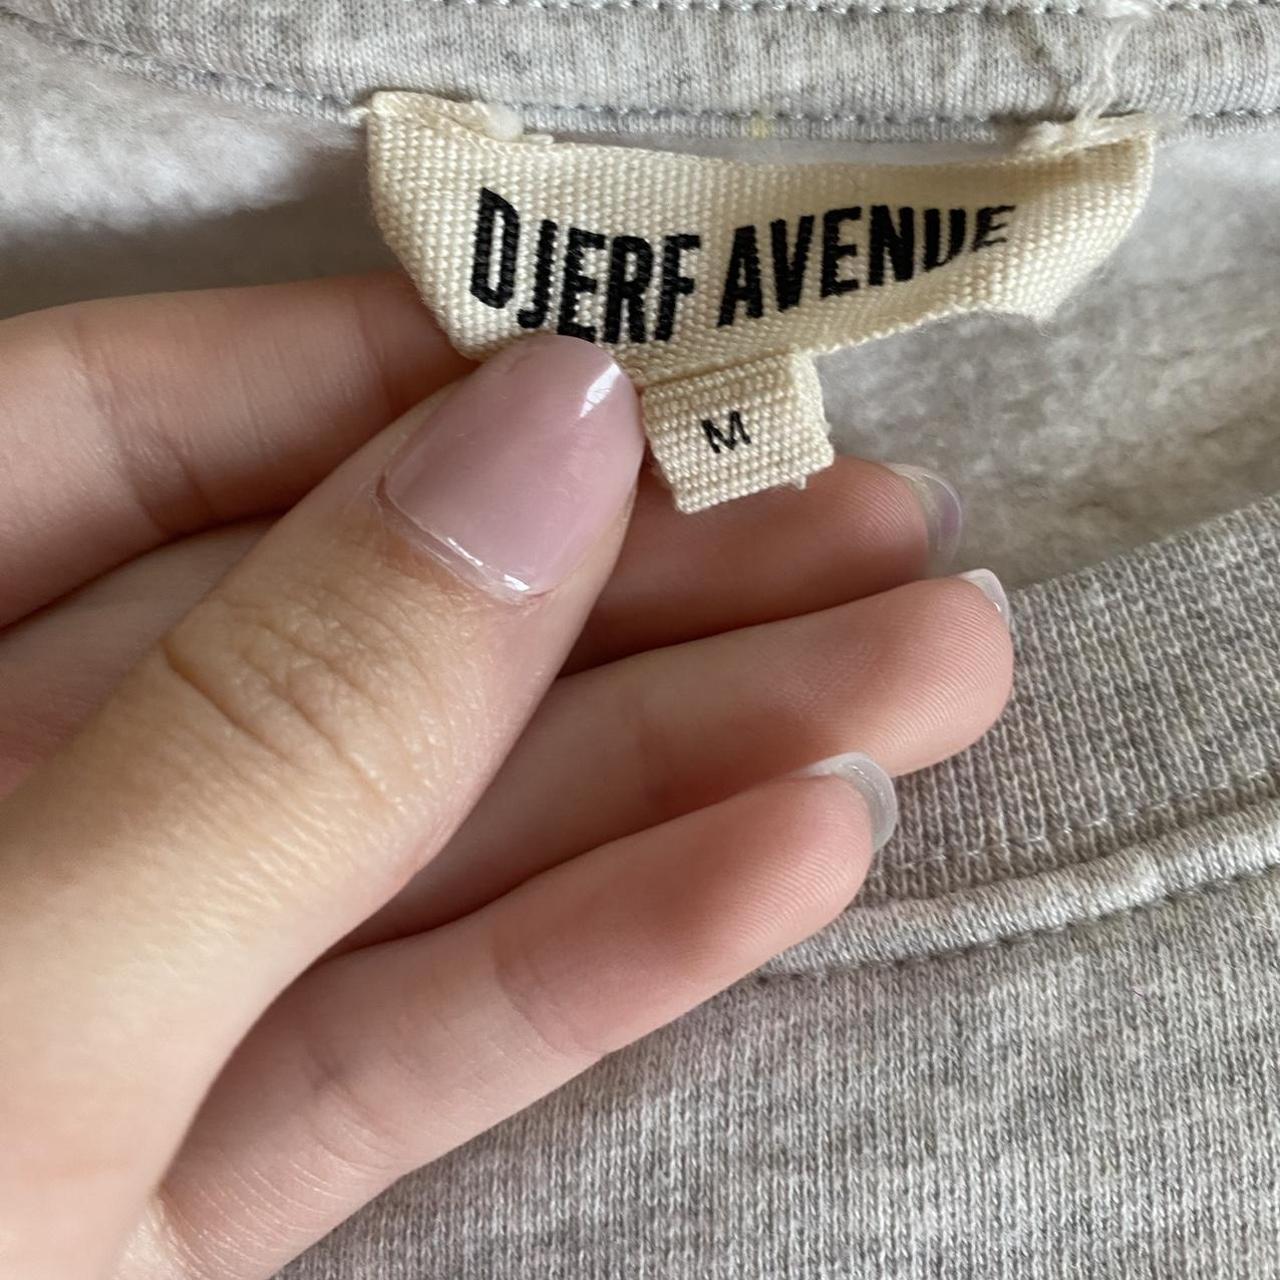 Djerf Avenue Women's Grey Sweatshirt (3)